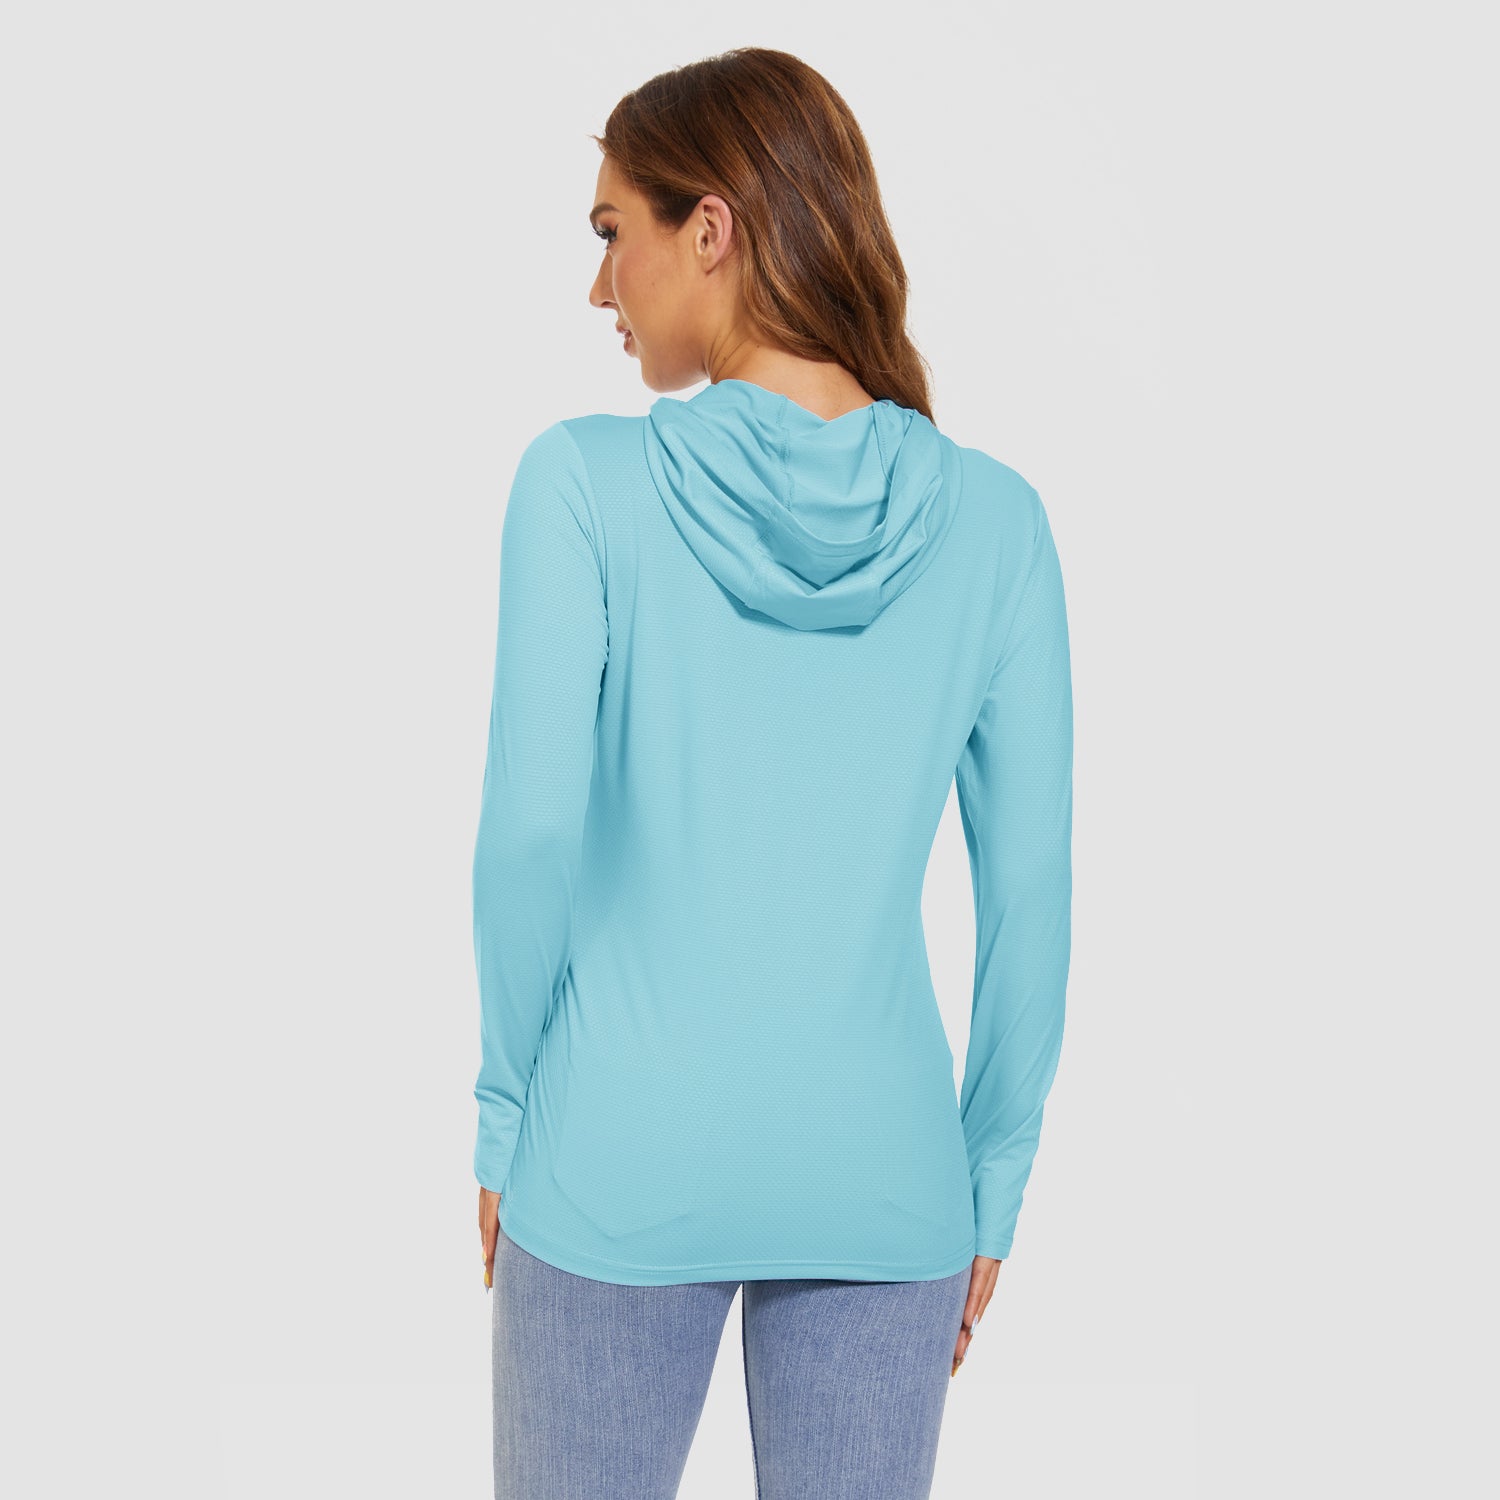 Huaai Womens Plus Size Casual Tops UPF 50+ Sun Long Sleeve Outdoor Shirts  Cool Quick Dry Fishing Hiking Shirt Light Blue XL